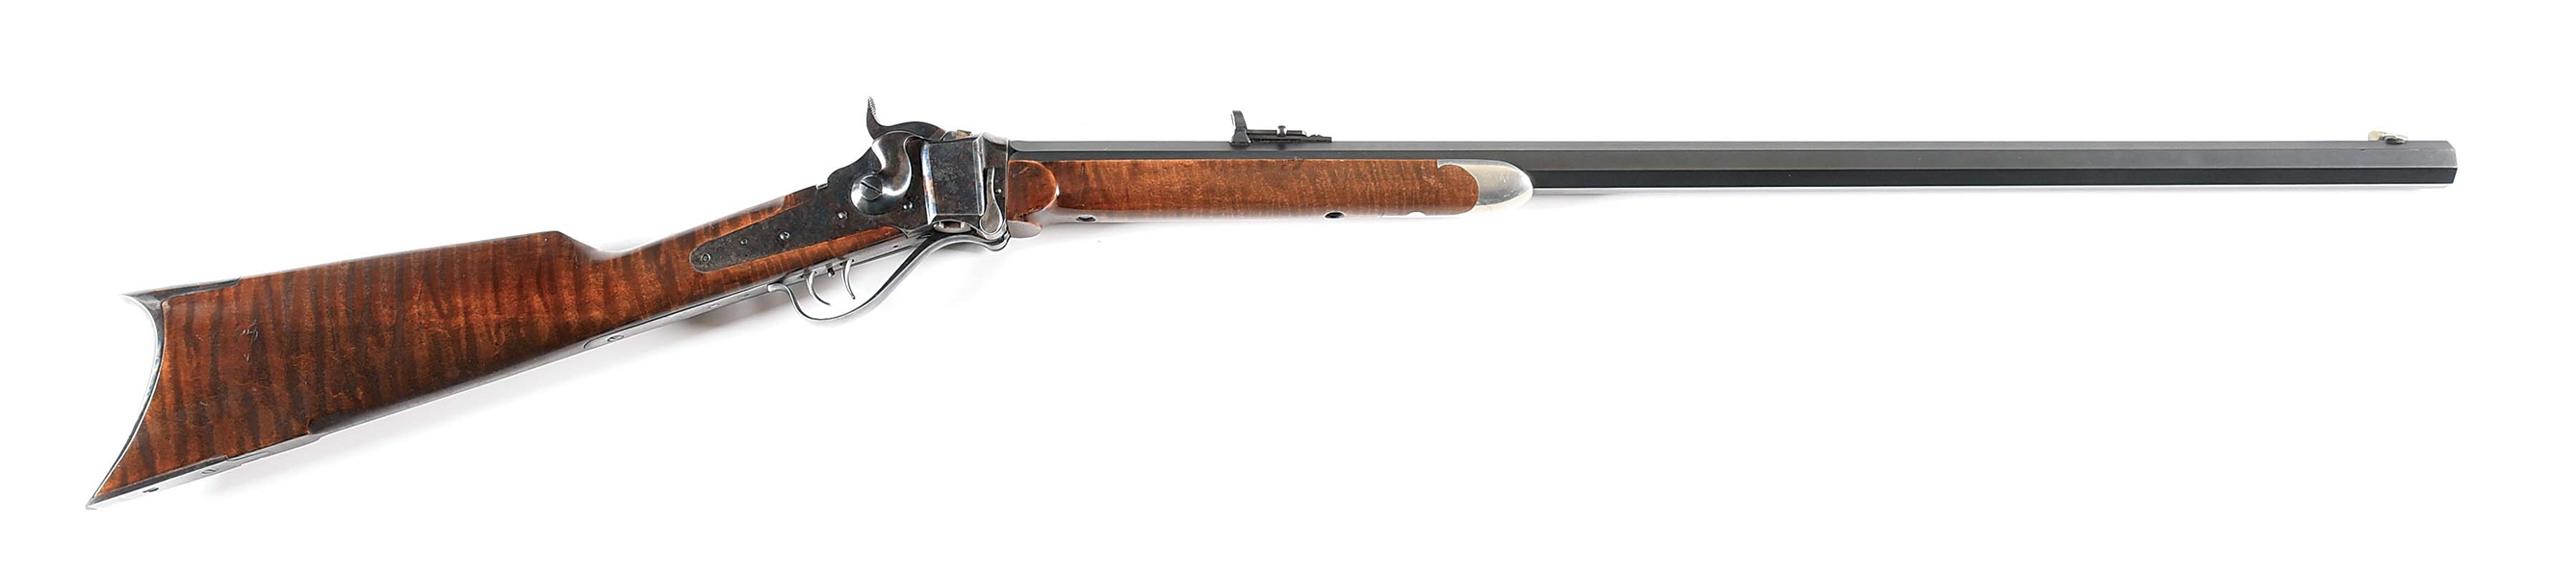 (M) C. SHARPS ARMS CO. INC MODEL 1874 SINGLE SHOT RIFLE.